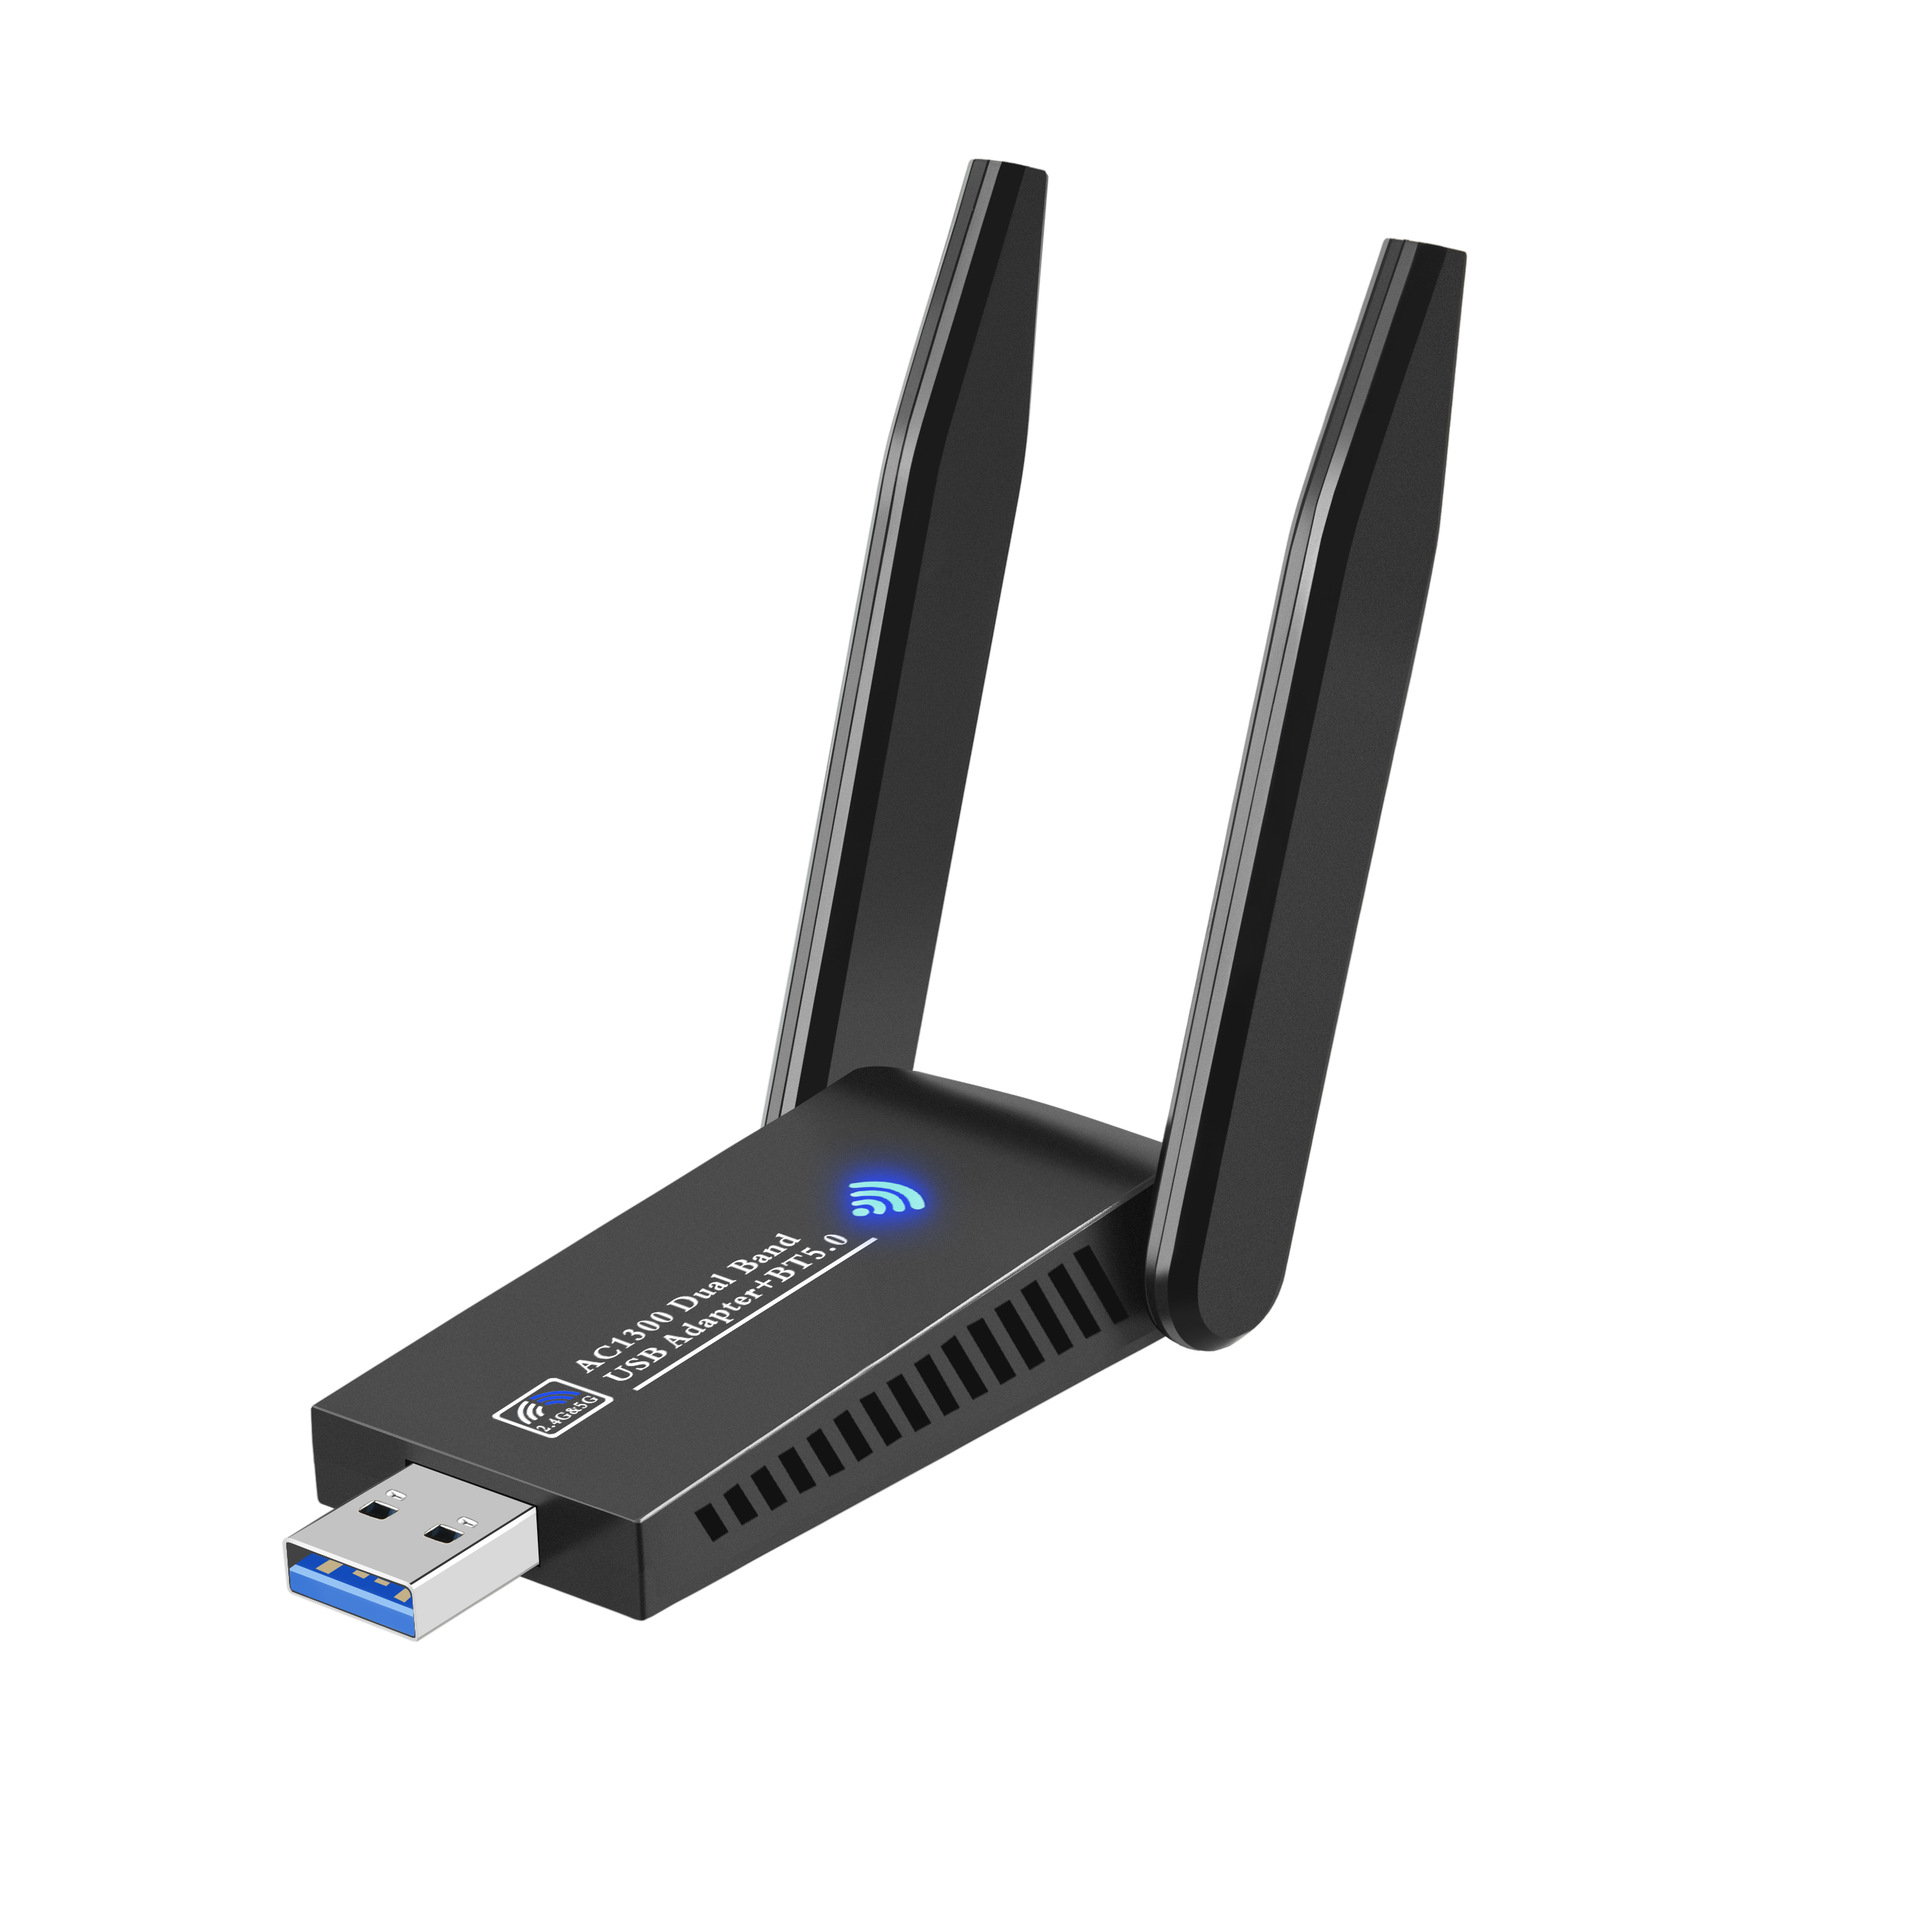 Clé WiFi USB 3g - 1300Mbps adaptateur wifi usb - USB 3.0 Dongle